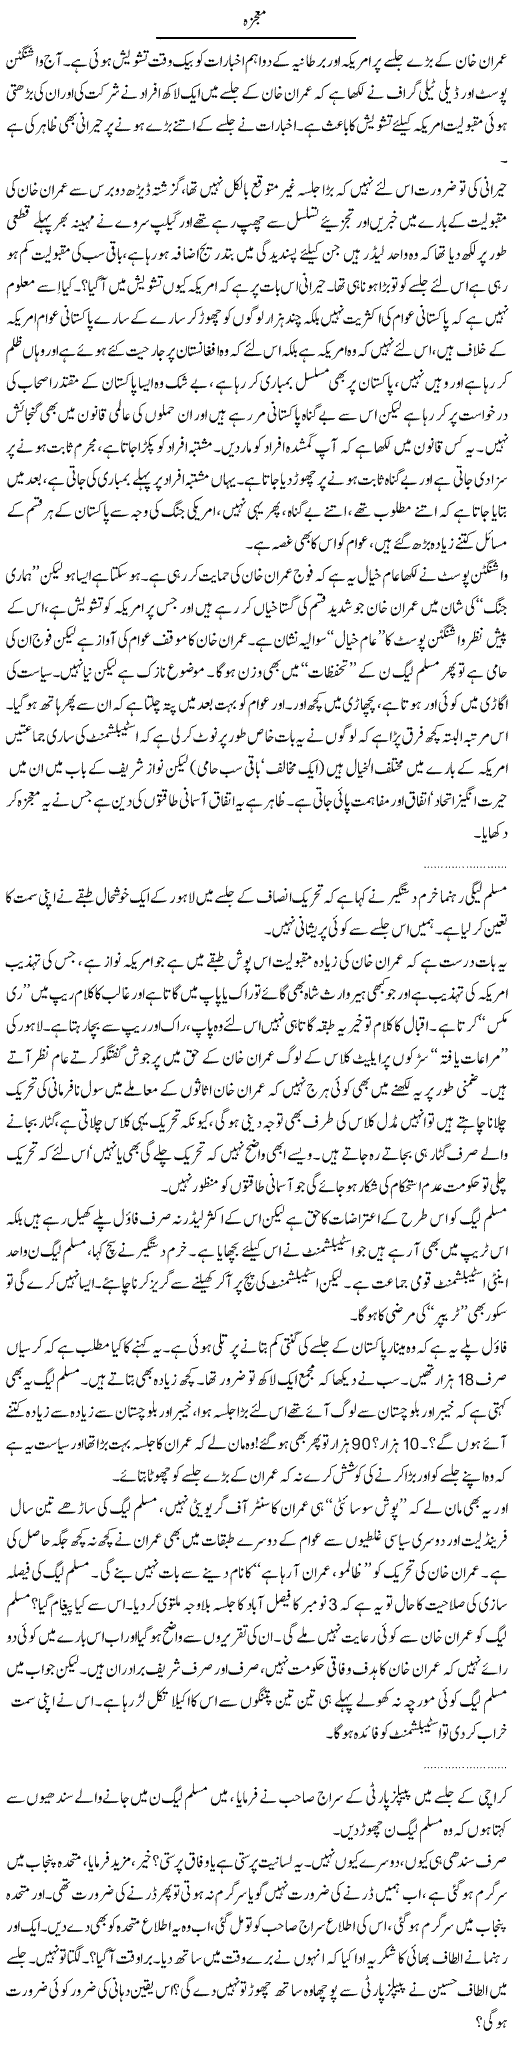 Popular Imran Khan Express Column Abdullah Tariq 2 November 2011